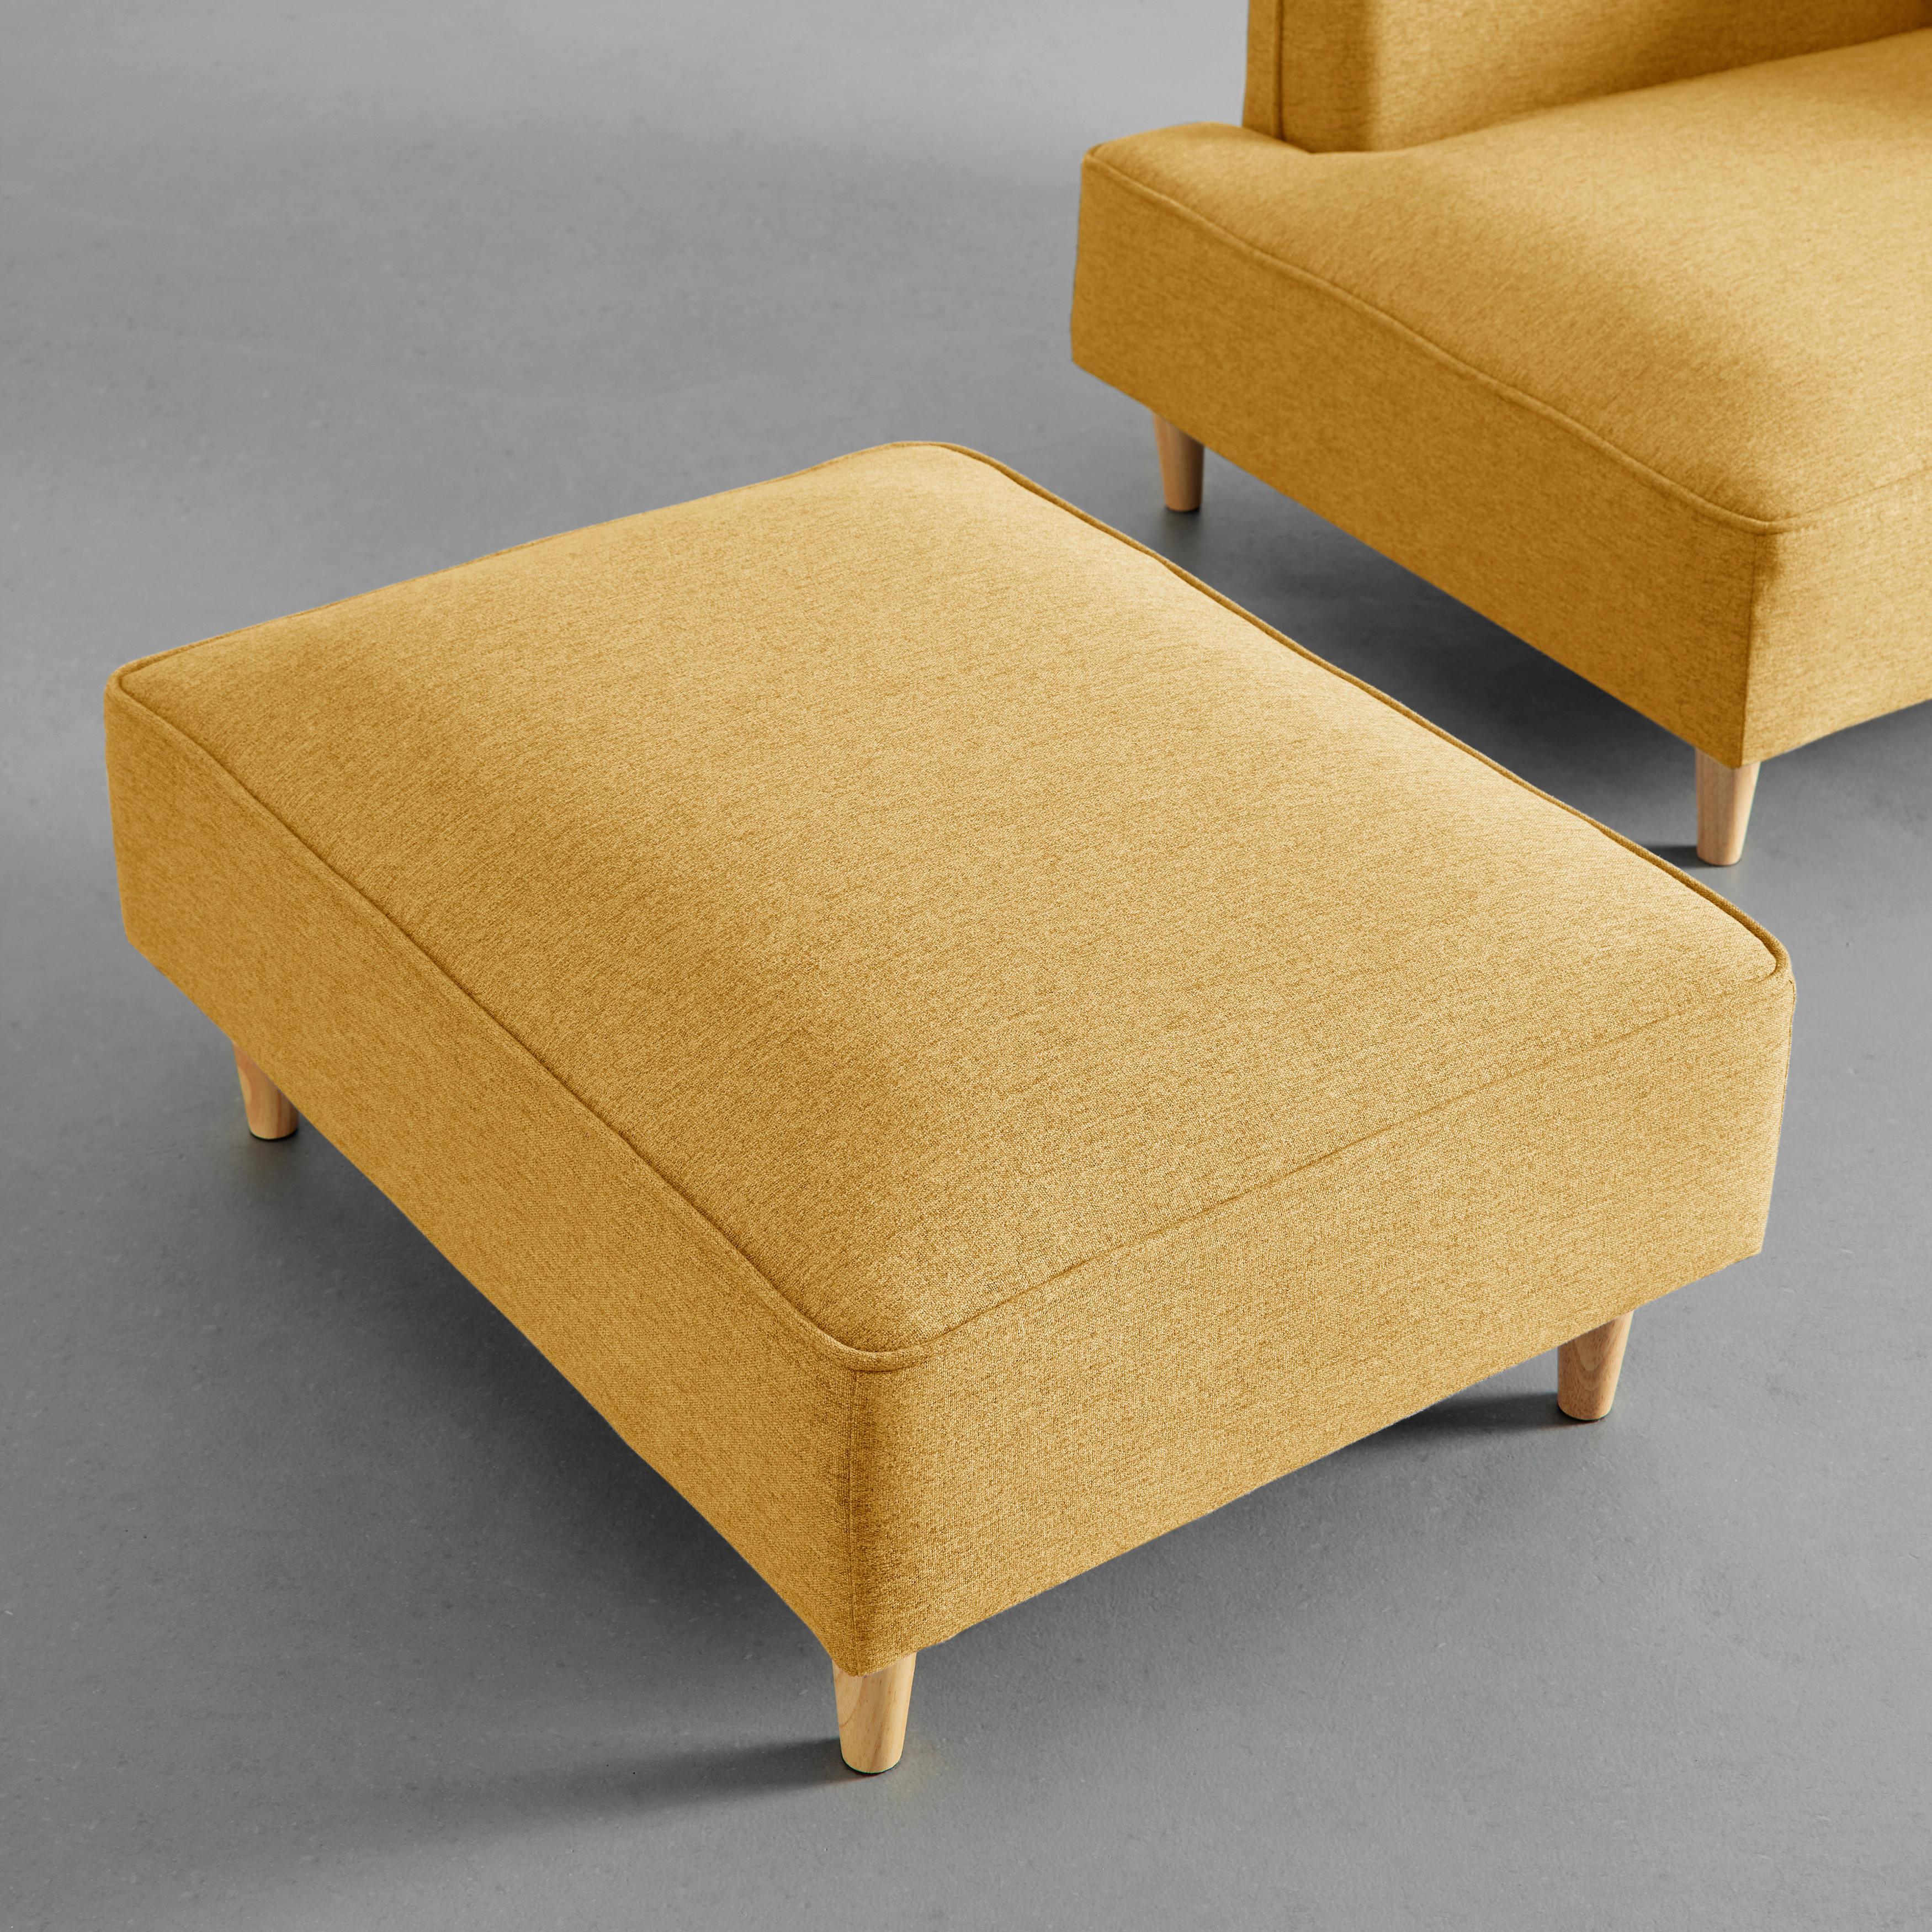 Modulares Sofa "Fanny" mit Hocker, gelb - Gelb/Naturfarben, MODERN, Holz/Textil (154/55/73cm) - Bessagi Home